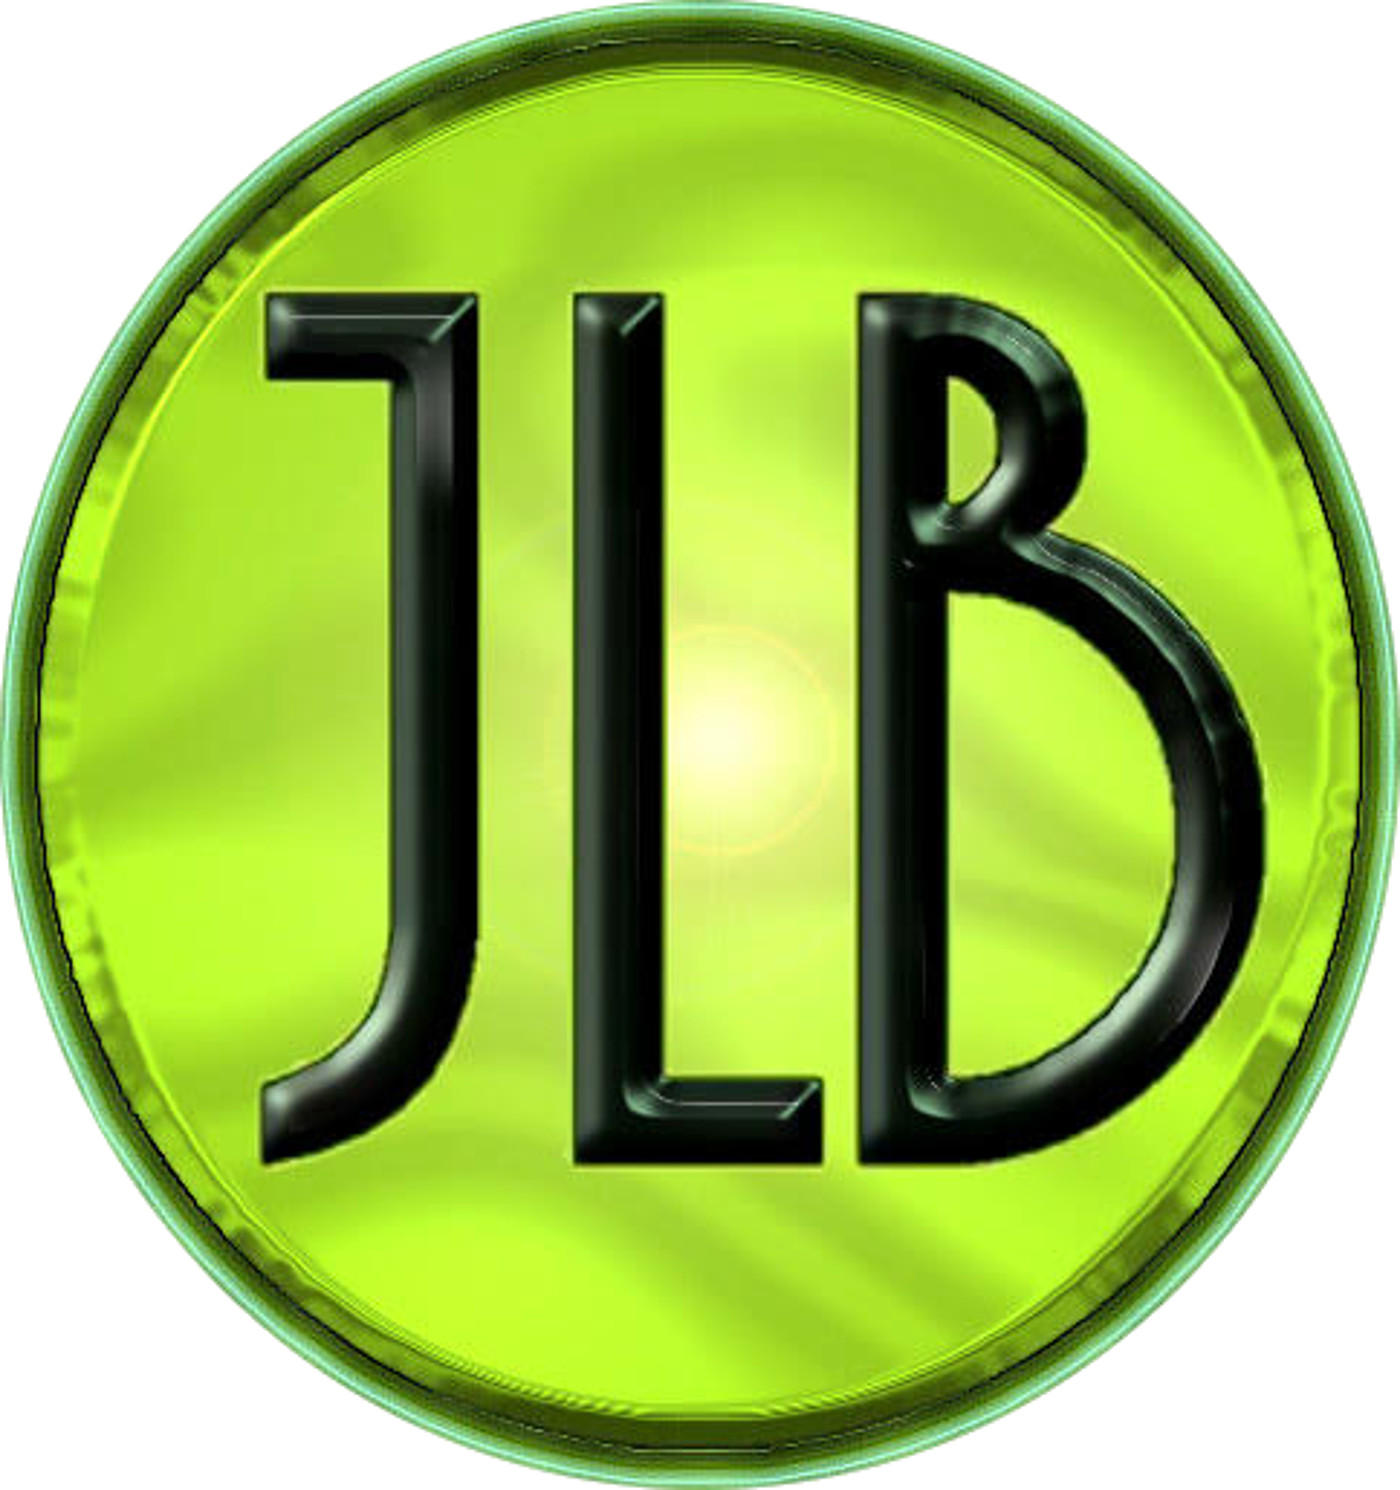 Lindsay & JLB Chat #1 - Mind-Body Connection (20-Apr-2017)